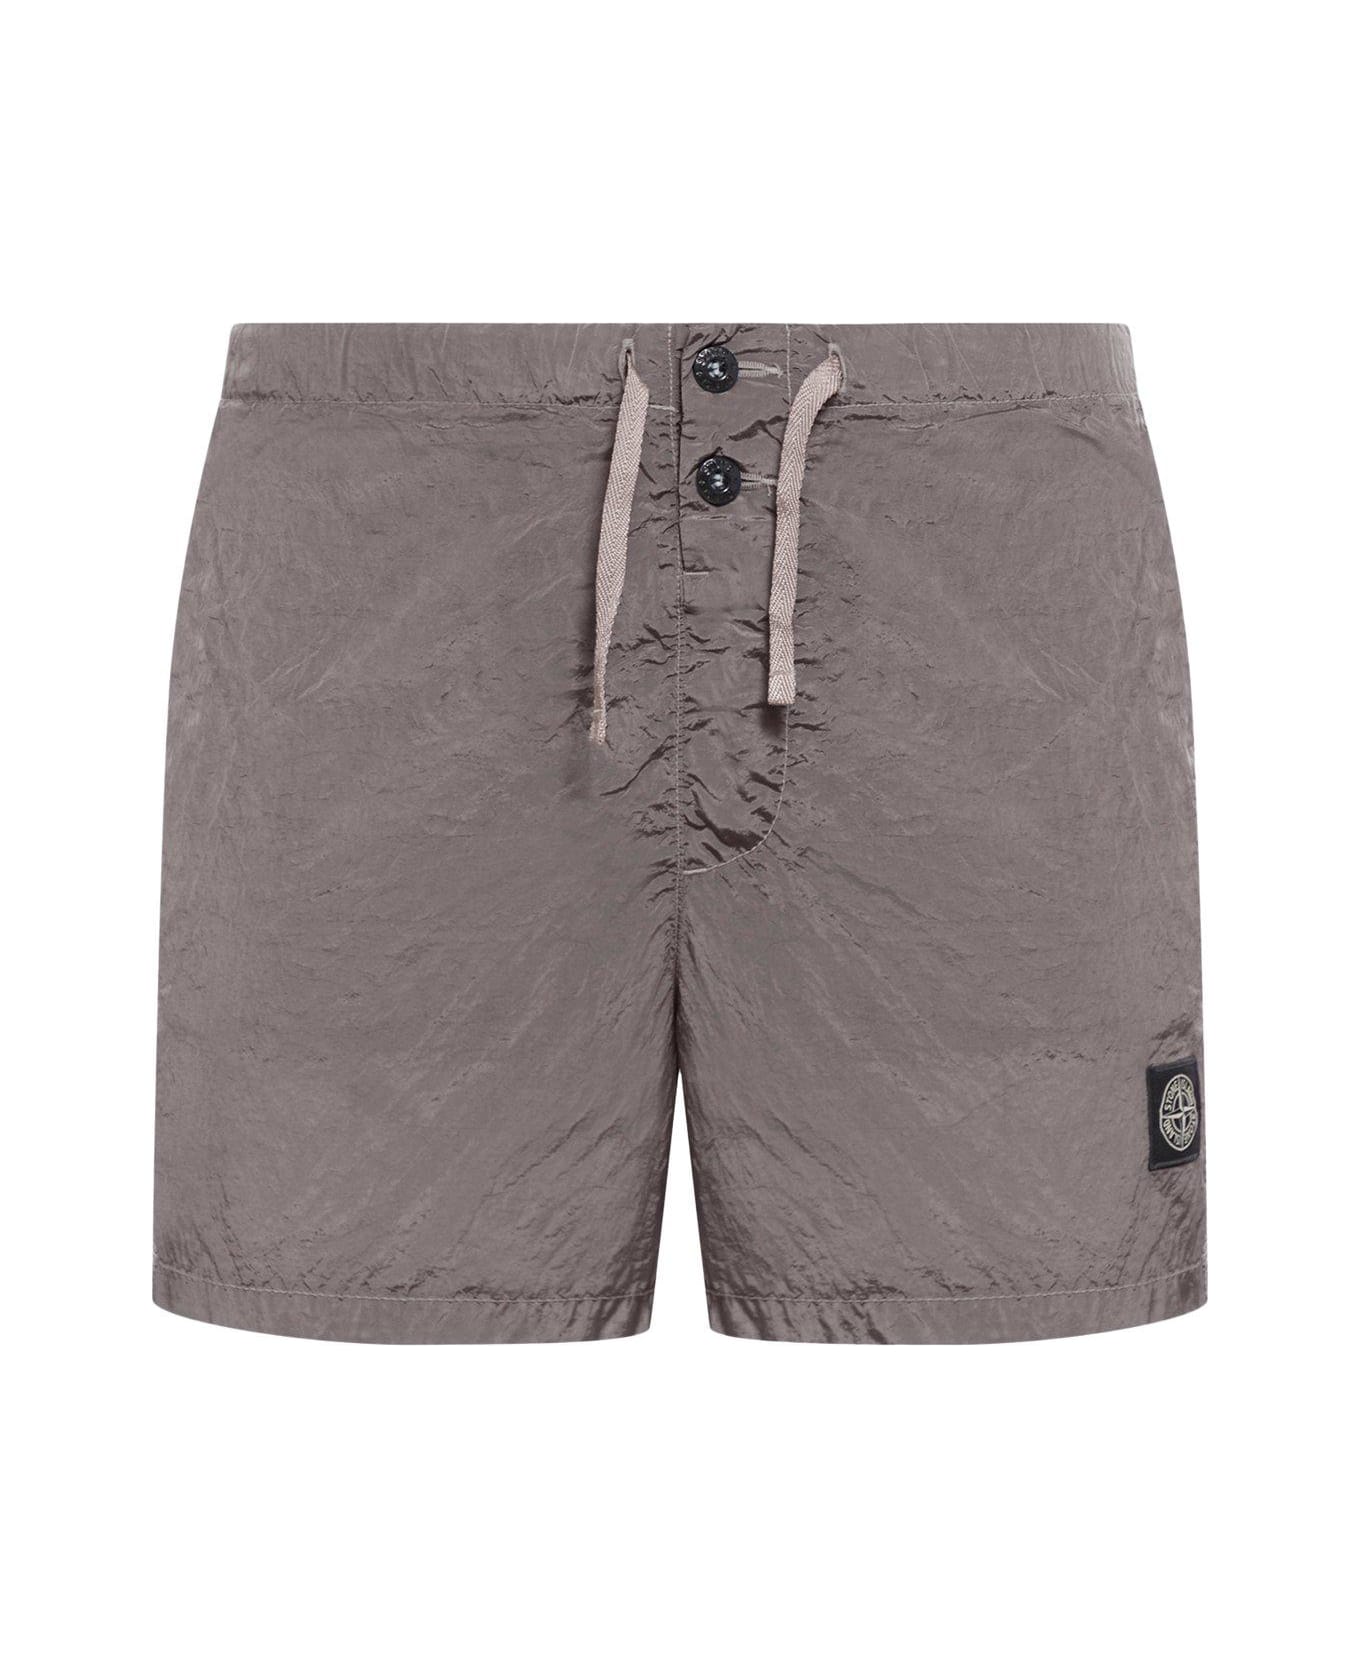 Stone Island Logo Patch Drawstring Shorts - Mud スイムトランクス